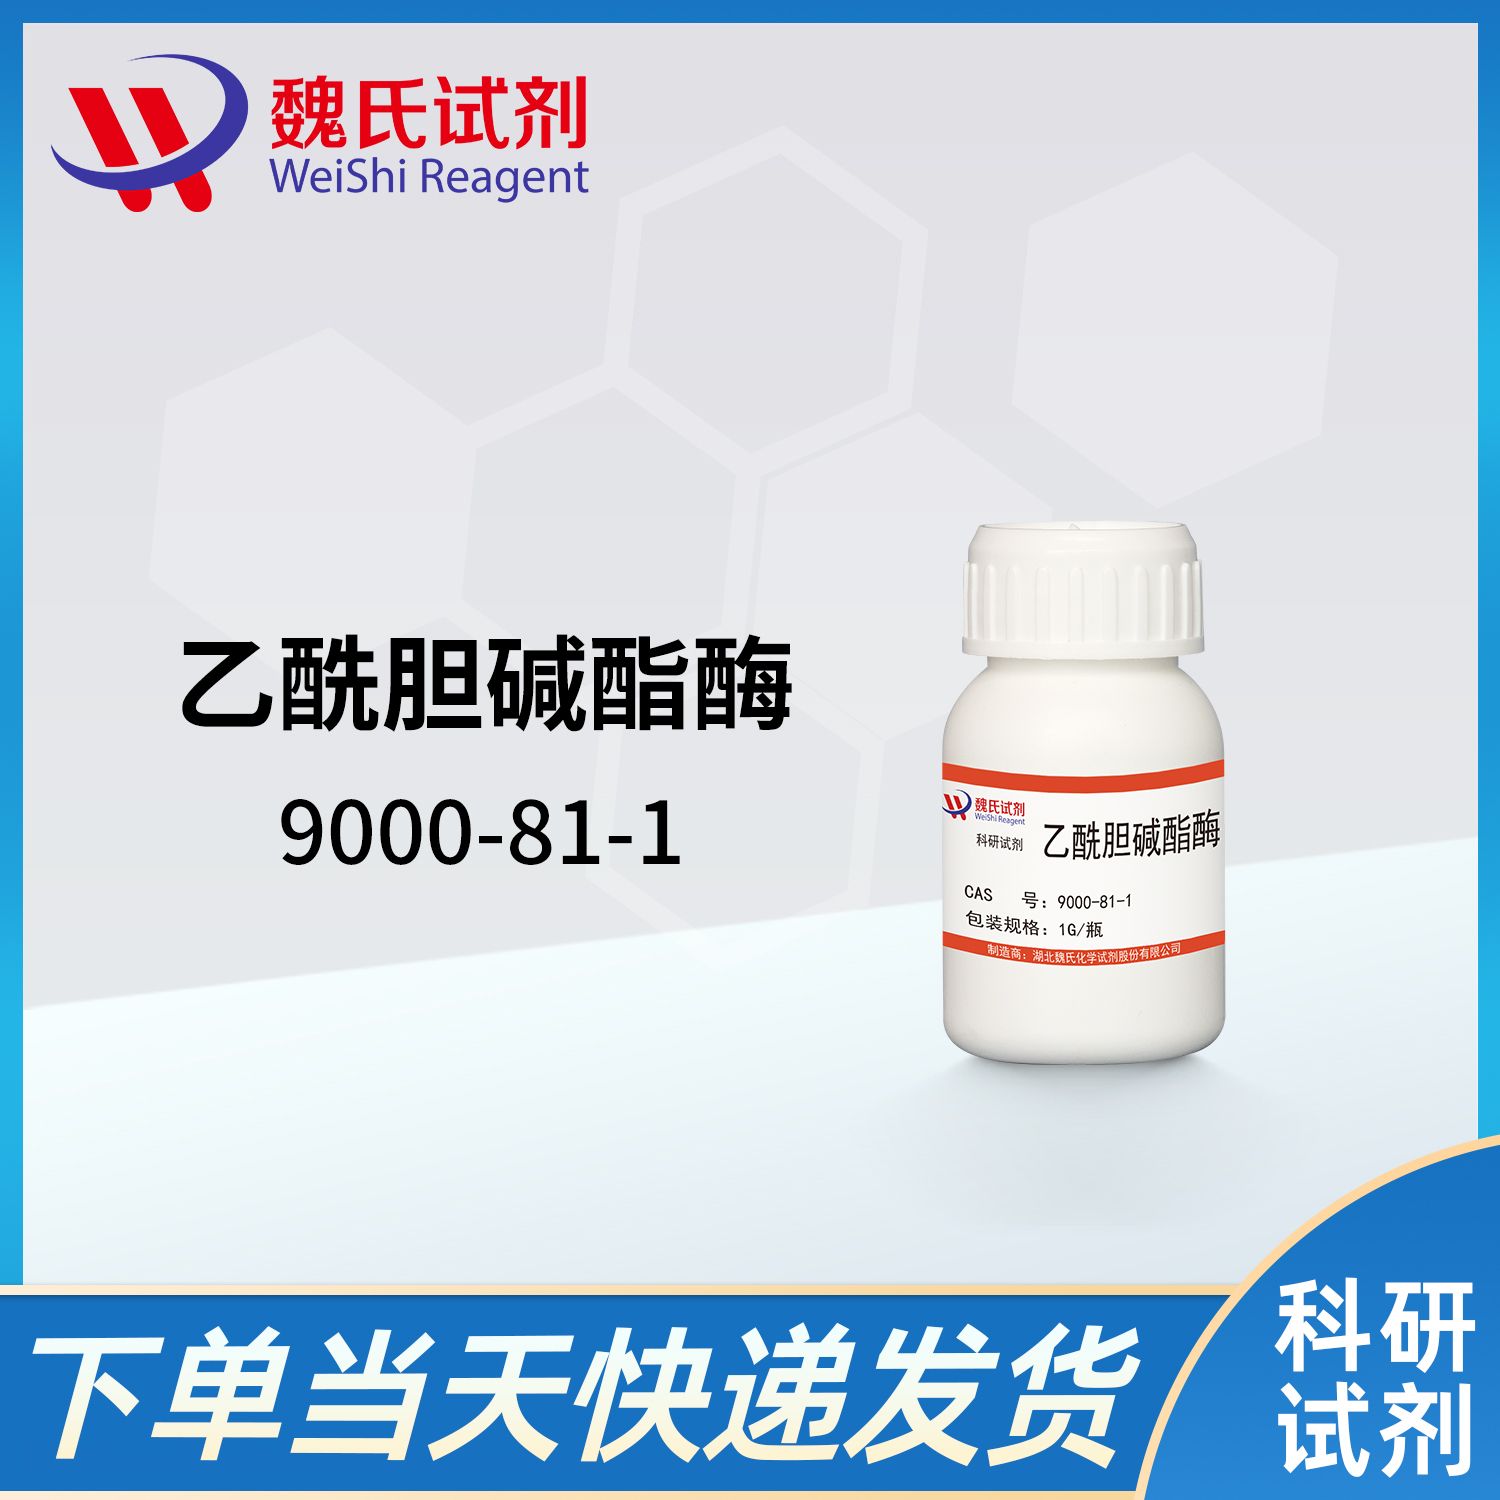 9000-81-1/乙酰胆碱酯酶/Anticholinesterase